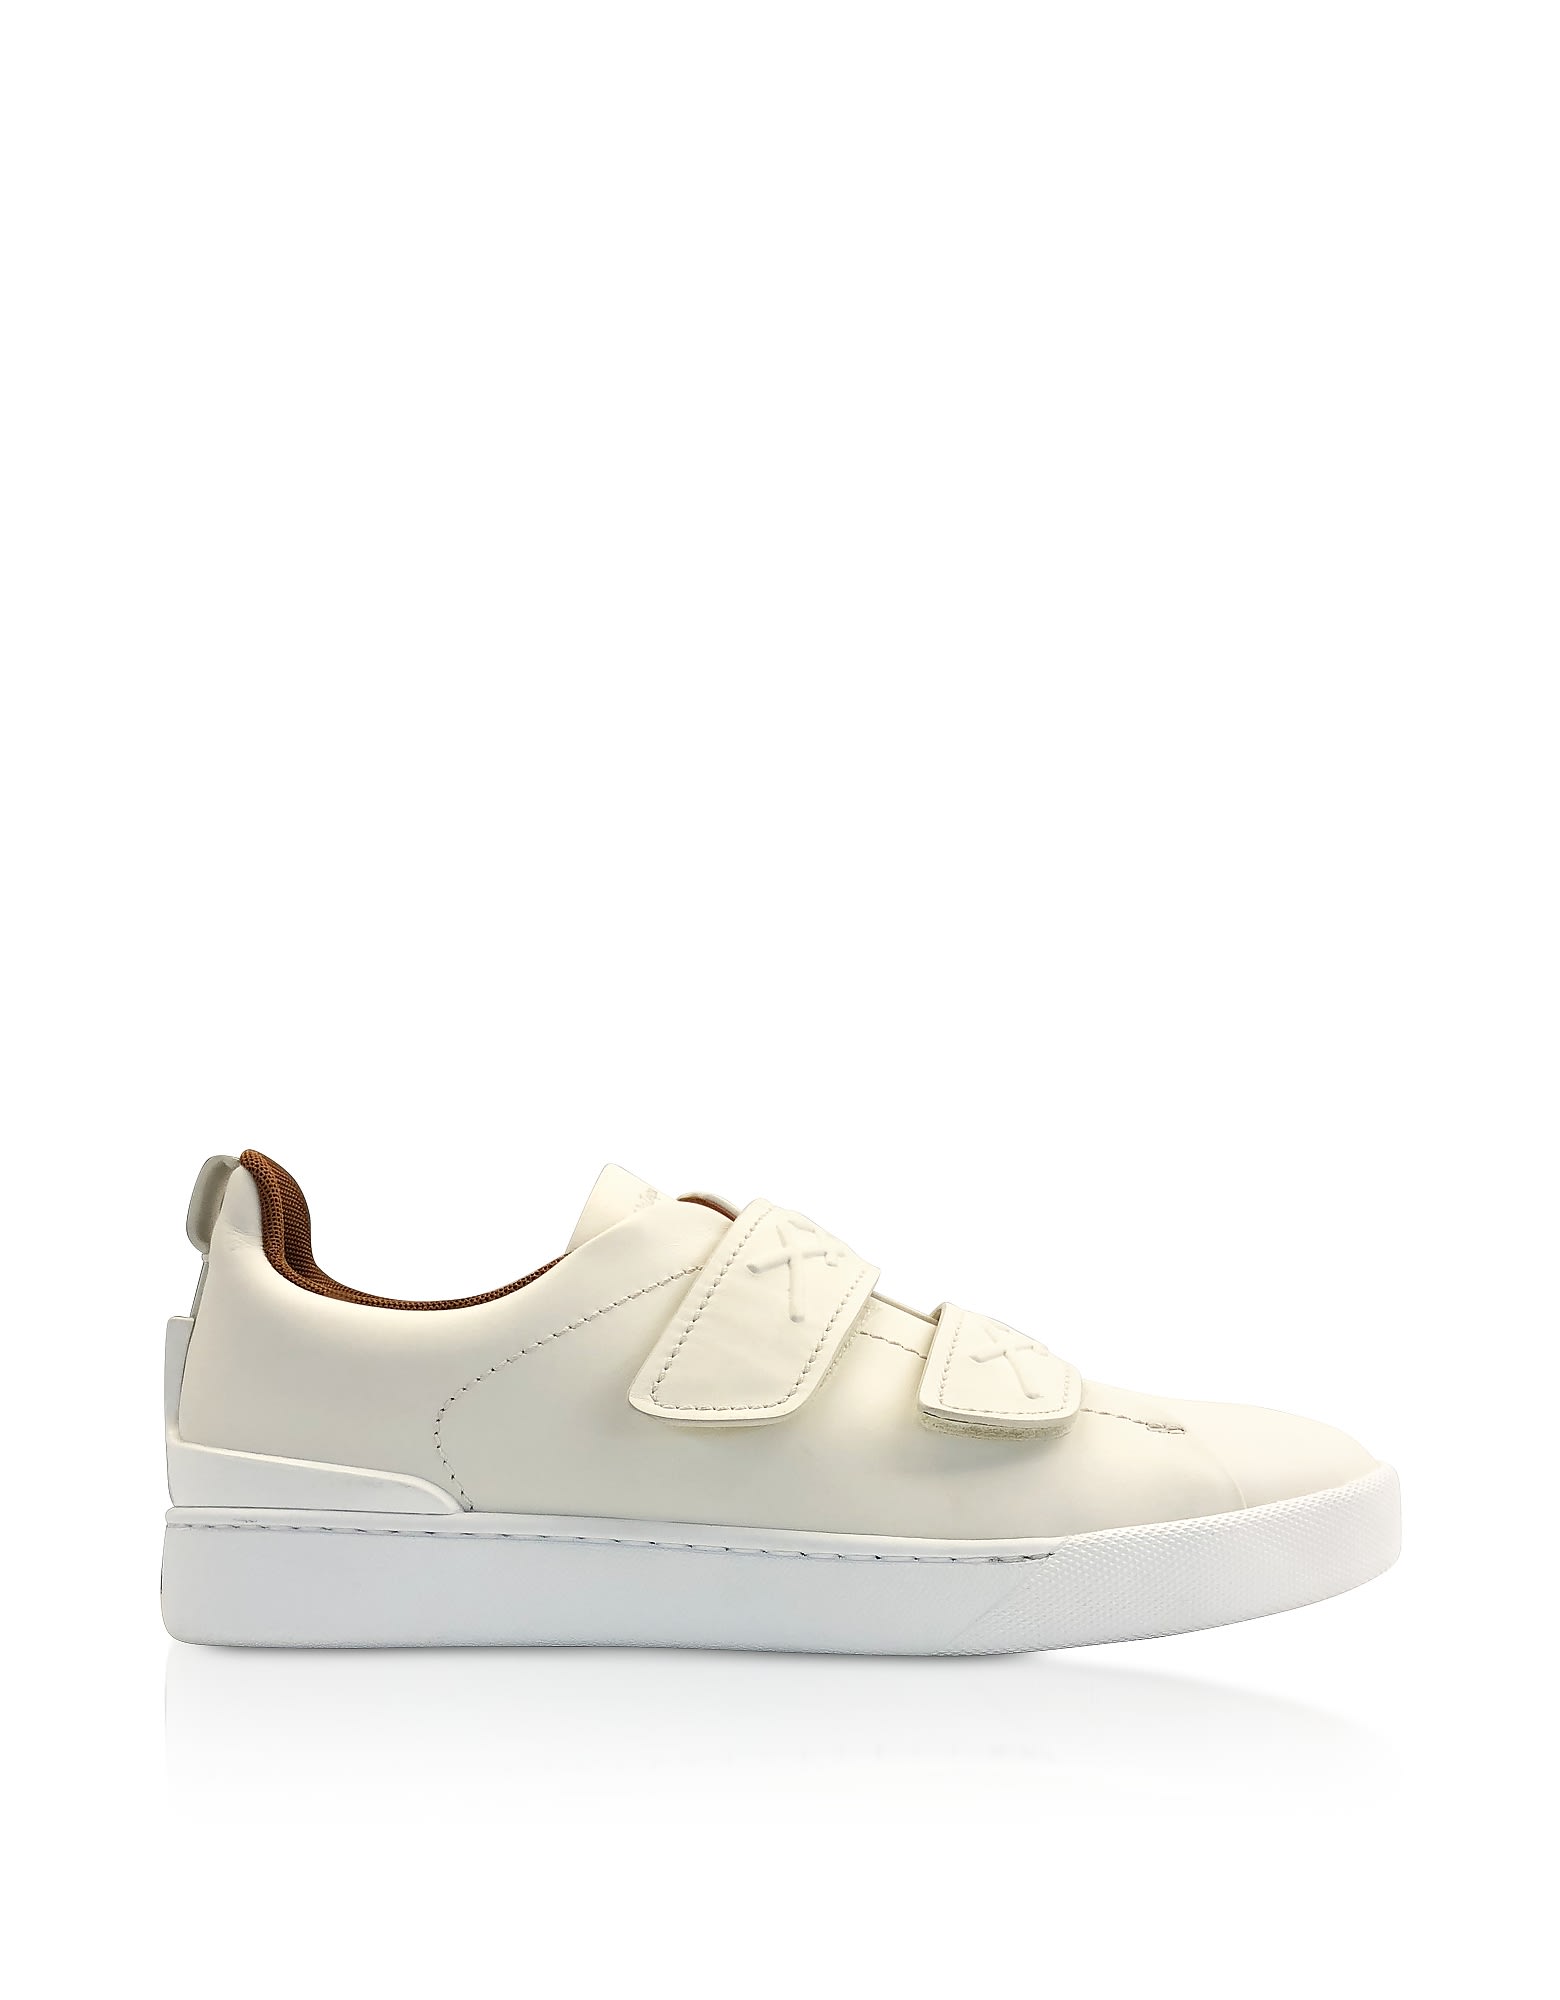 Ermenegildo Zegna White Leather Low-top Sneakers